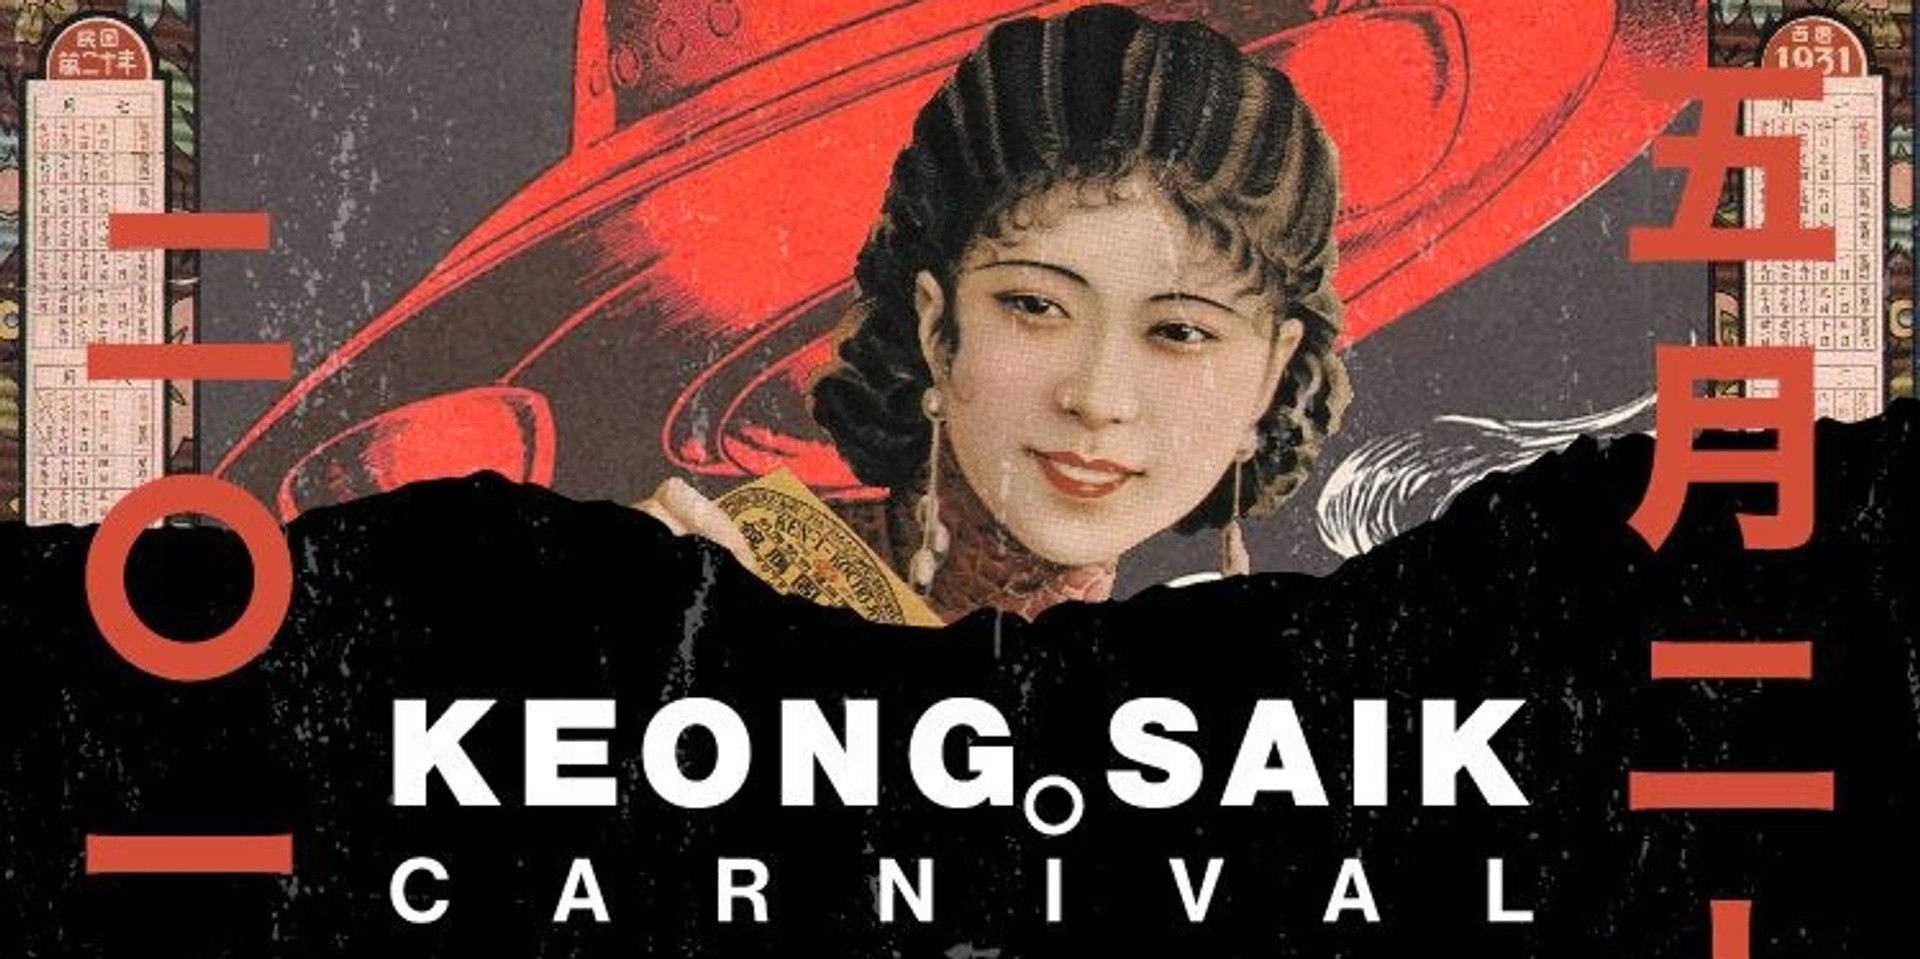 Keong Saik Carnival showcases the Chinese underground scene